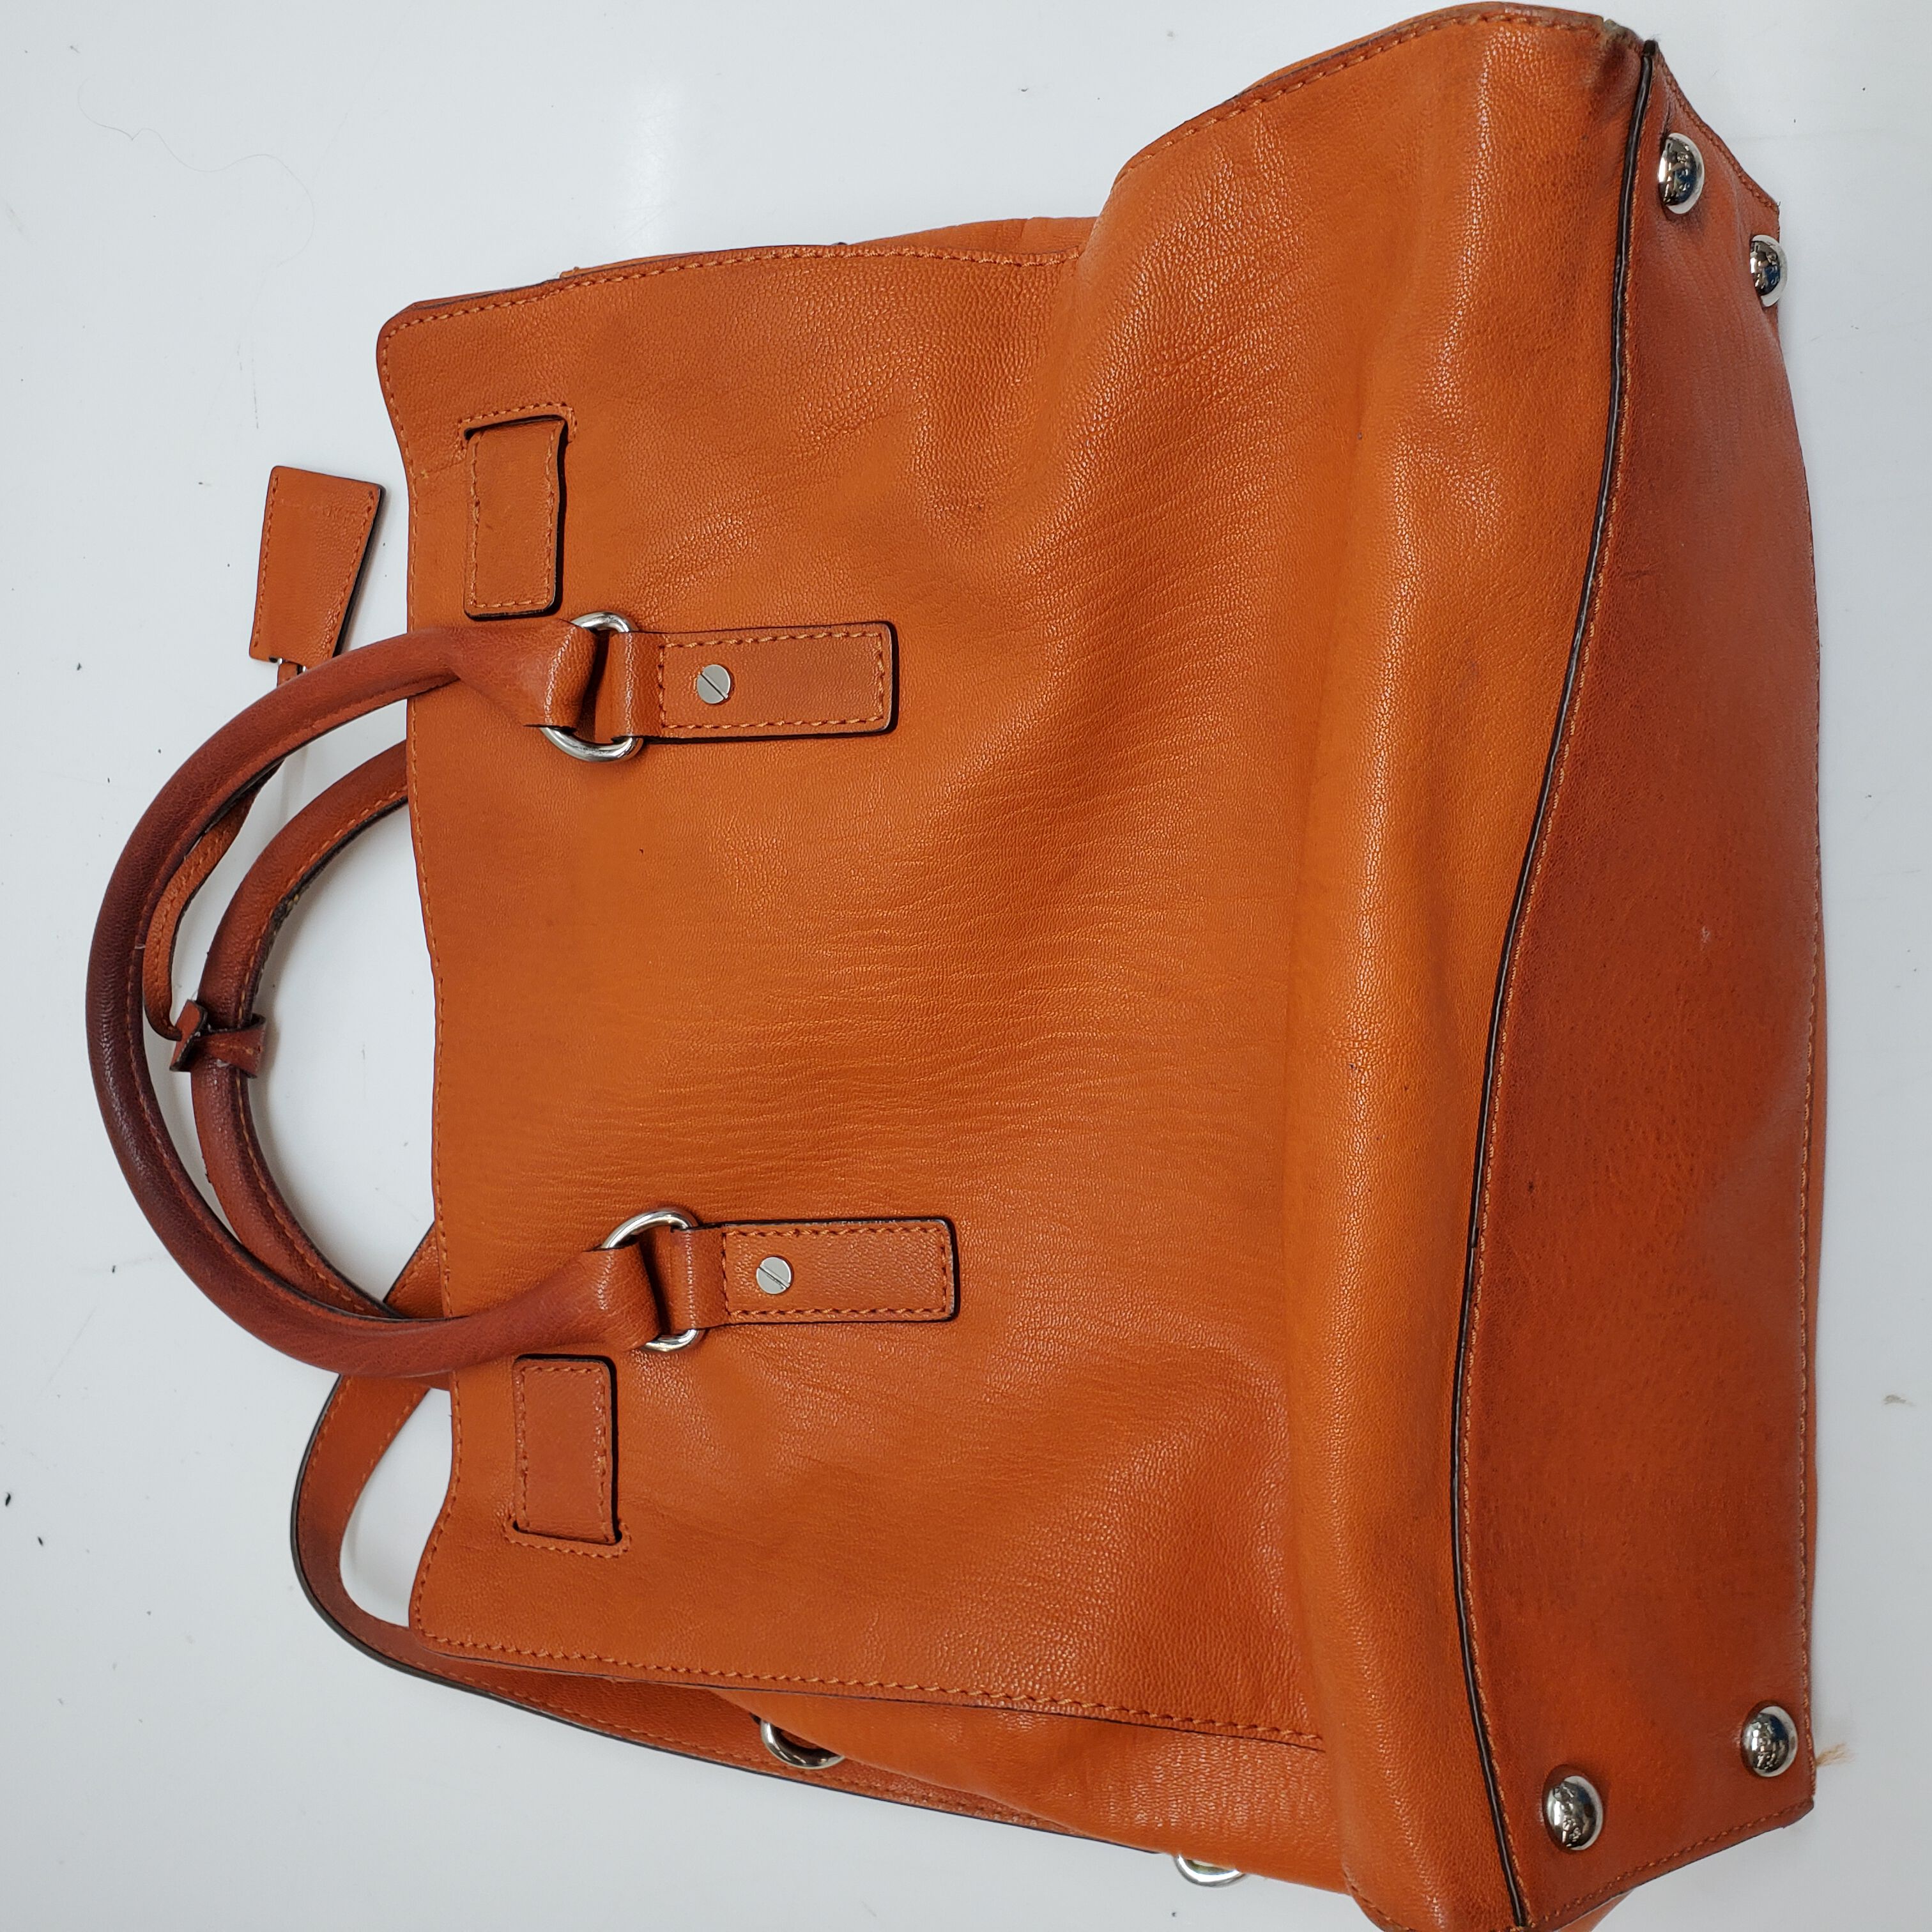 Leather crossbody bag Michael Kors Orange in Leather - 17891058